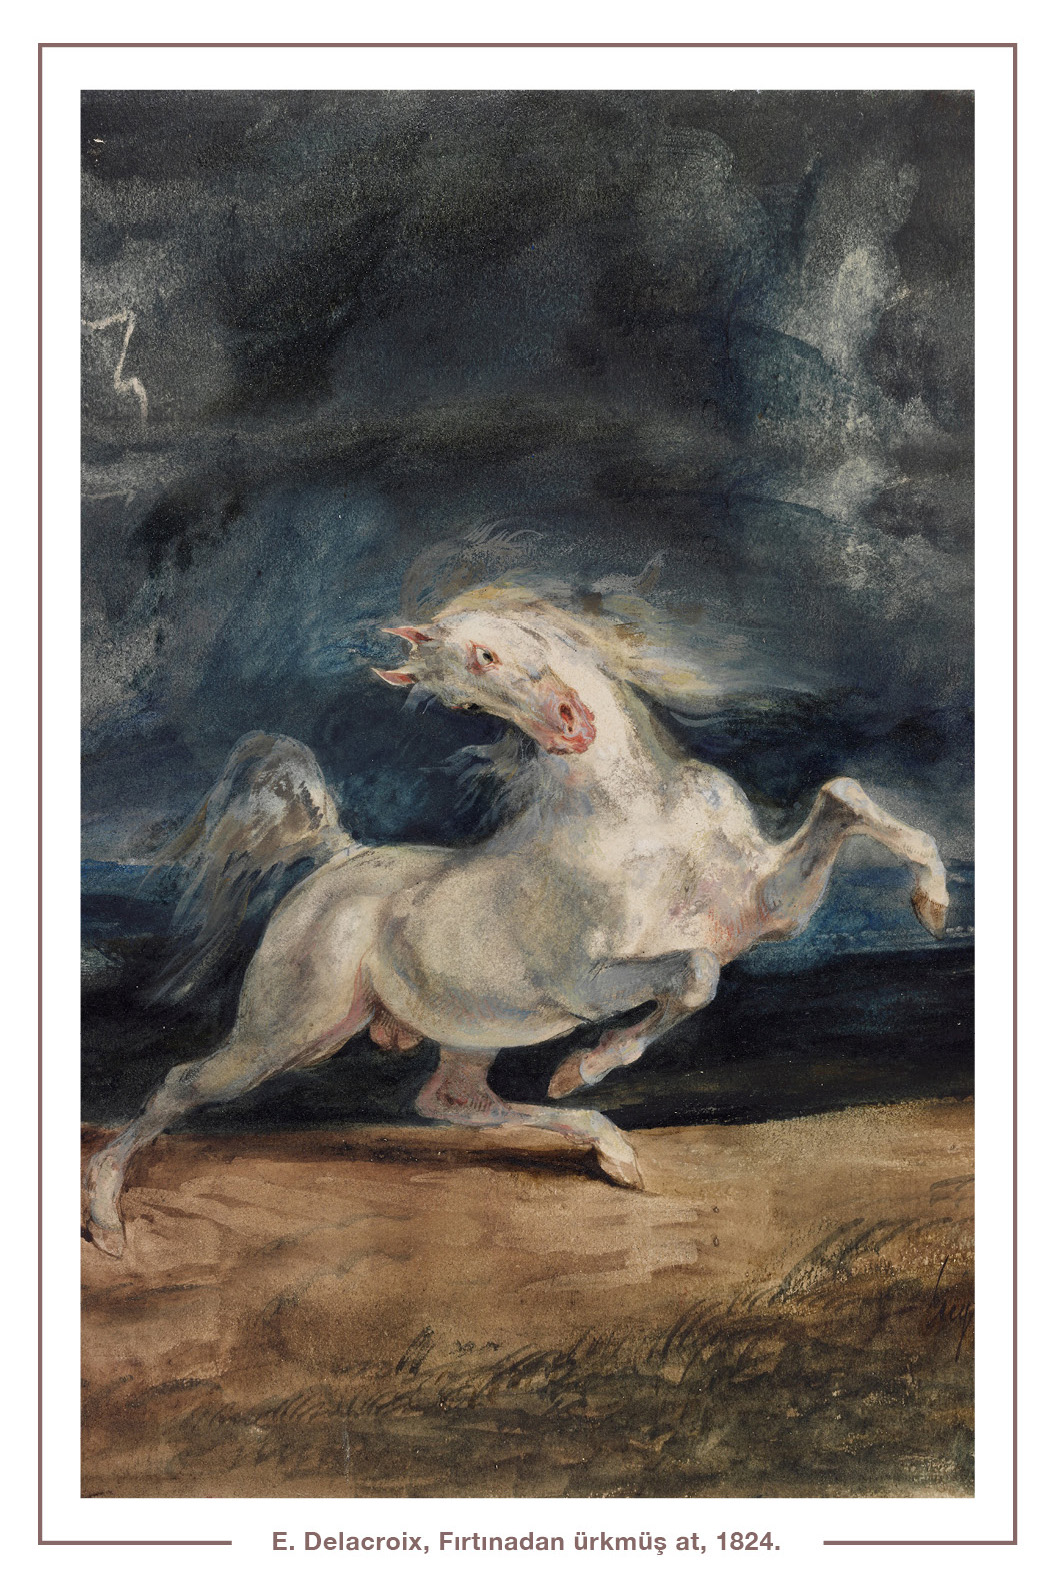 E. Delacroix, Fırtınadan ürkmüş at, 1824.